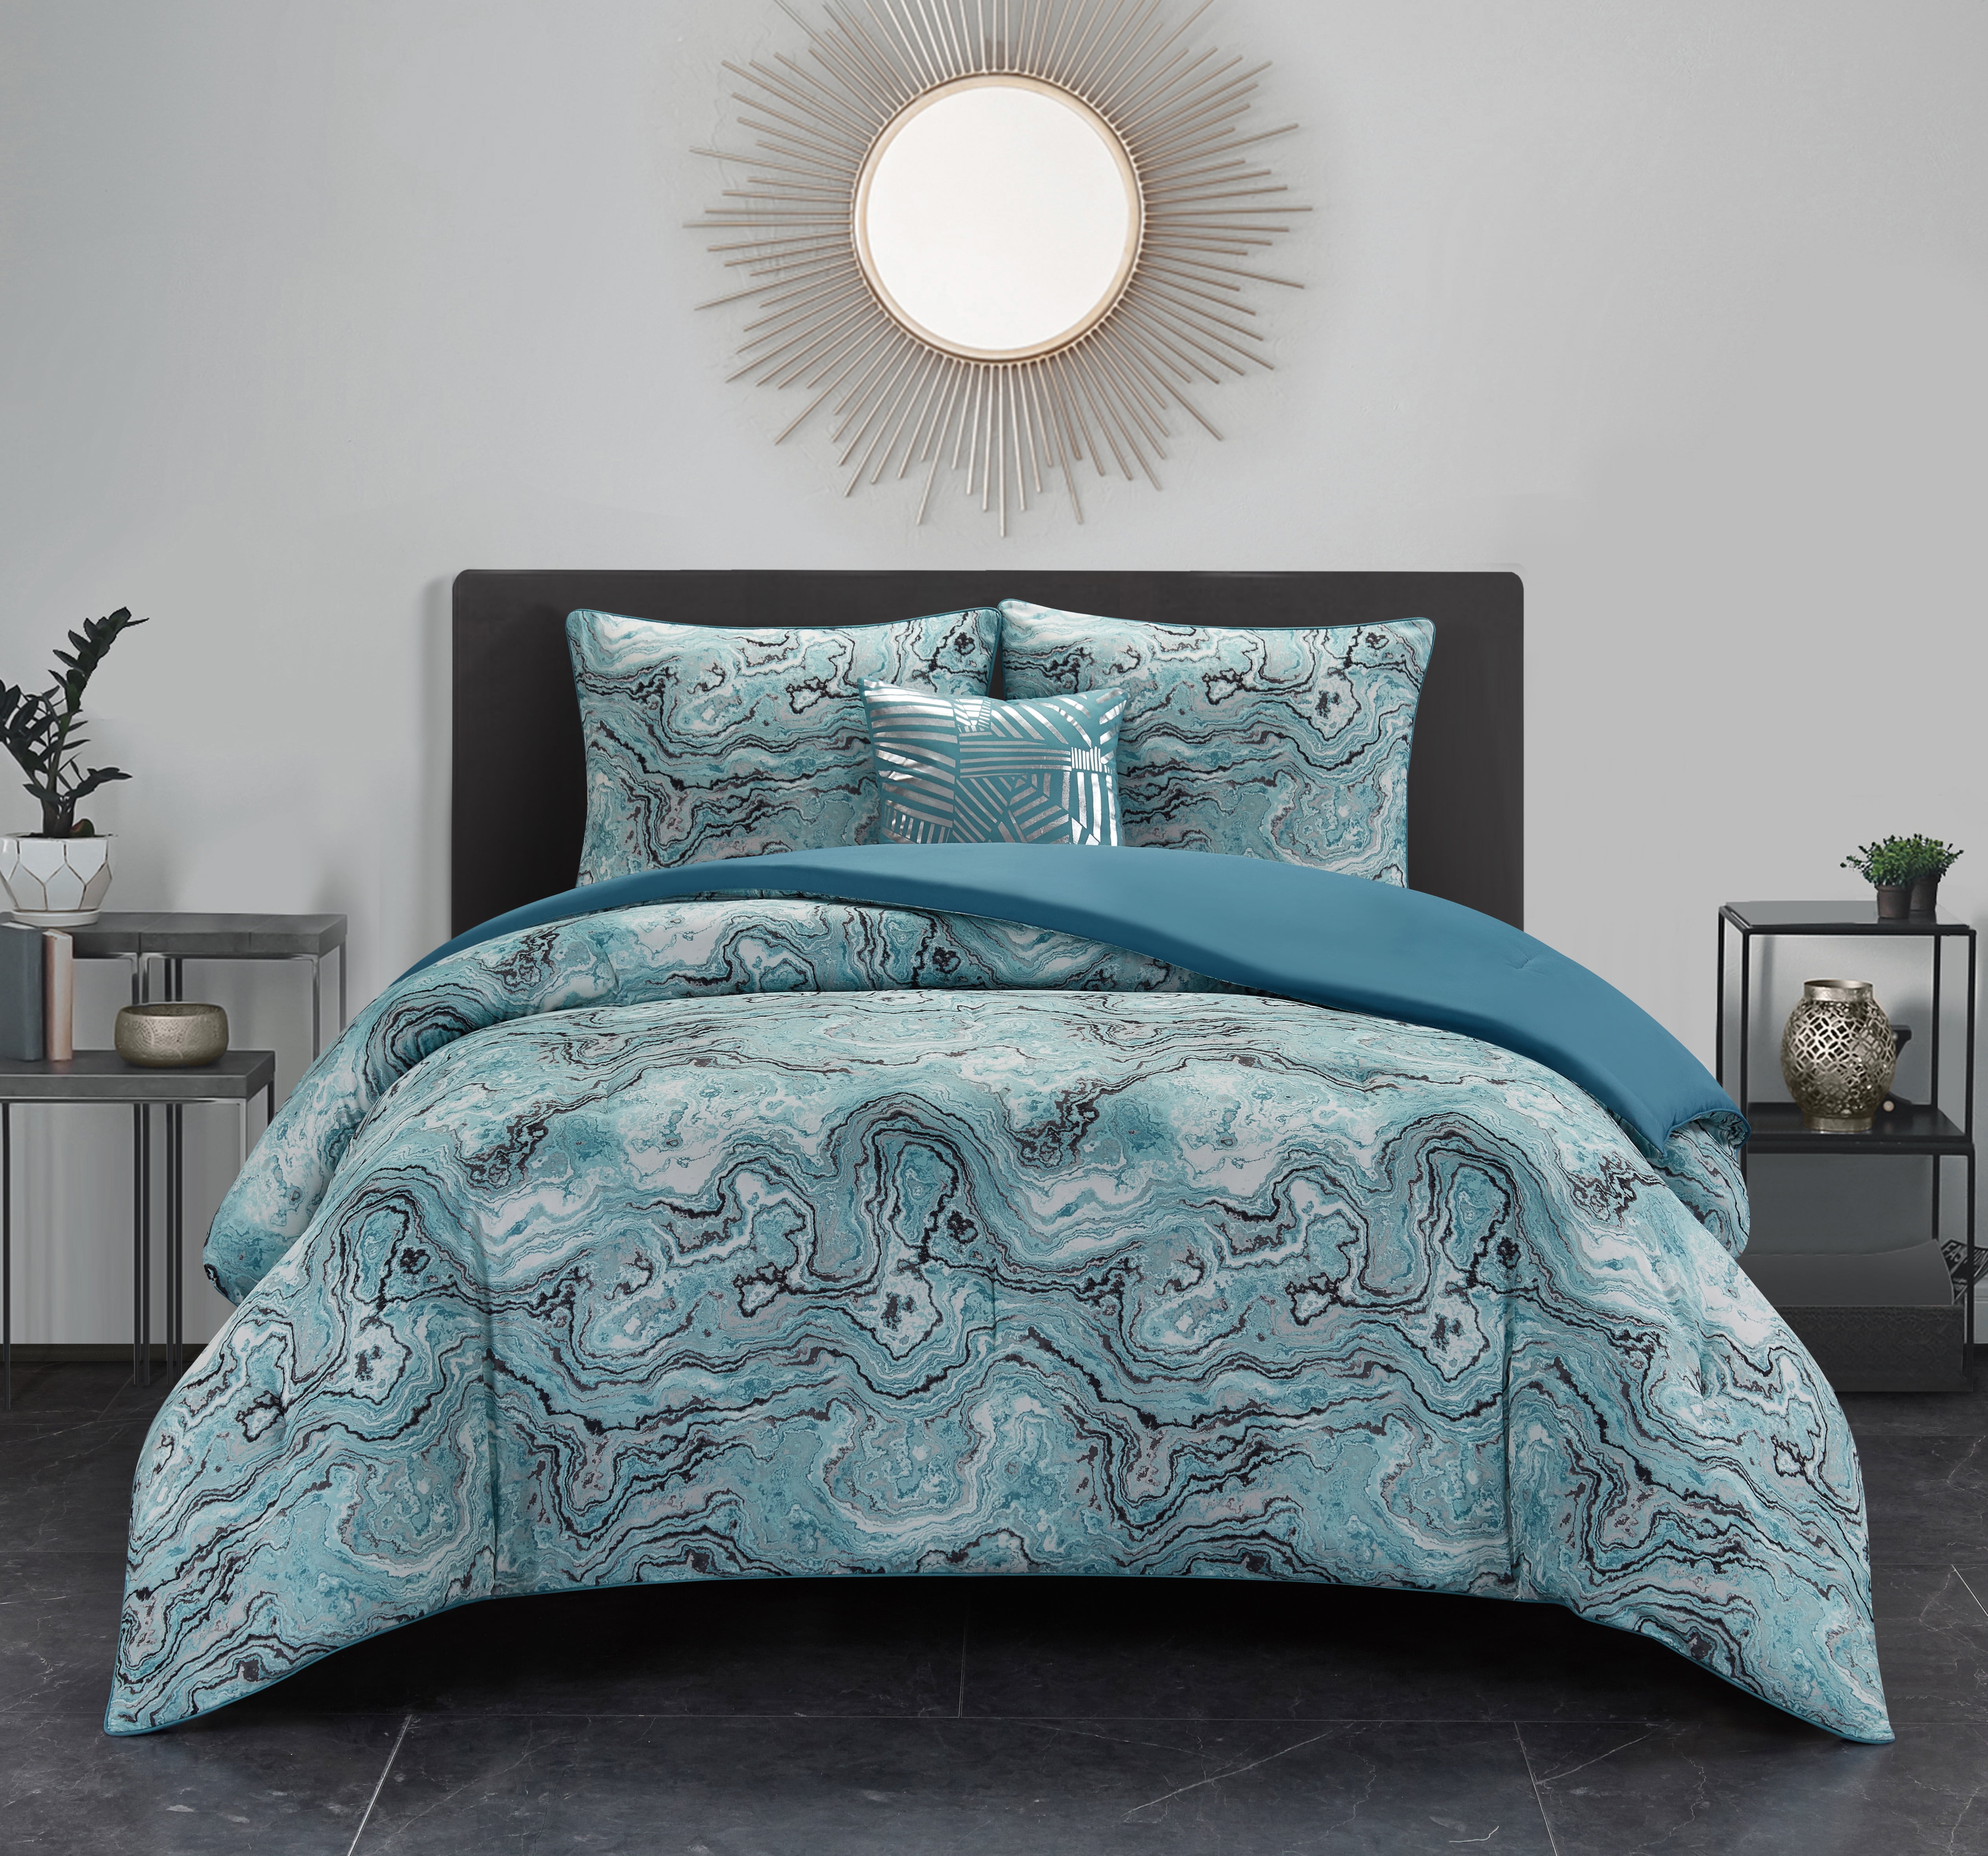 Lanco Sky Swirl Bedding Comforter Set, Duvets For Queen Size Beds